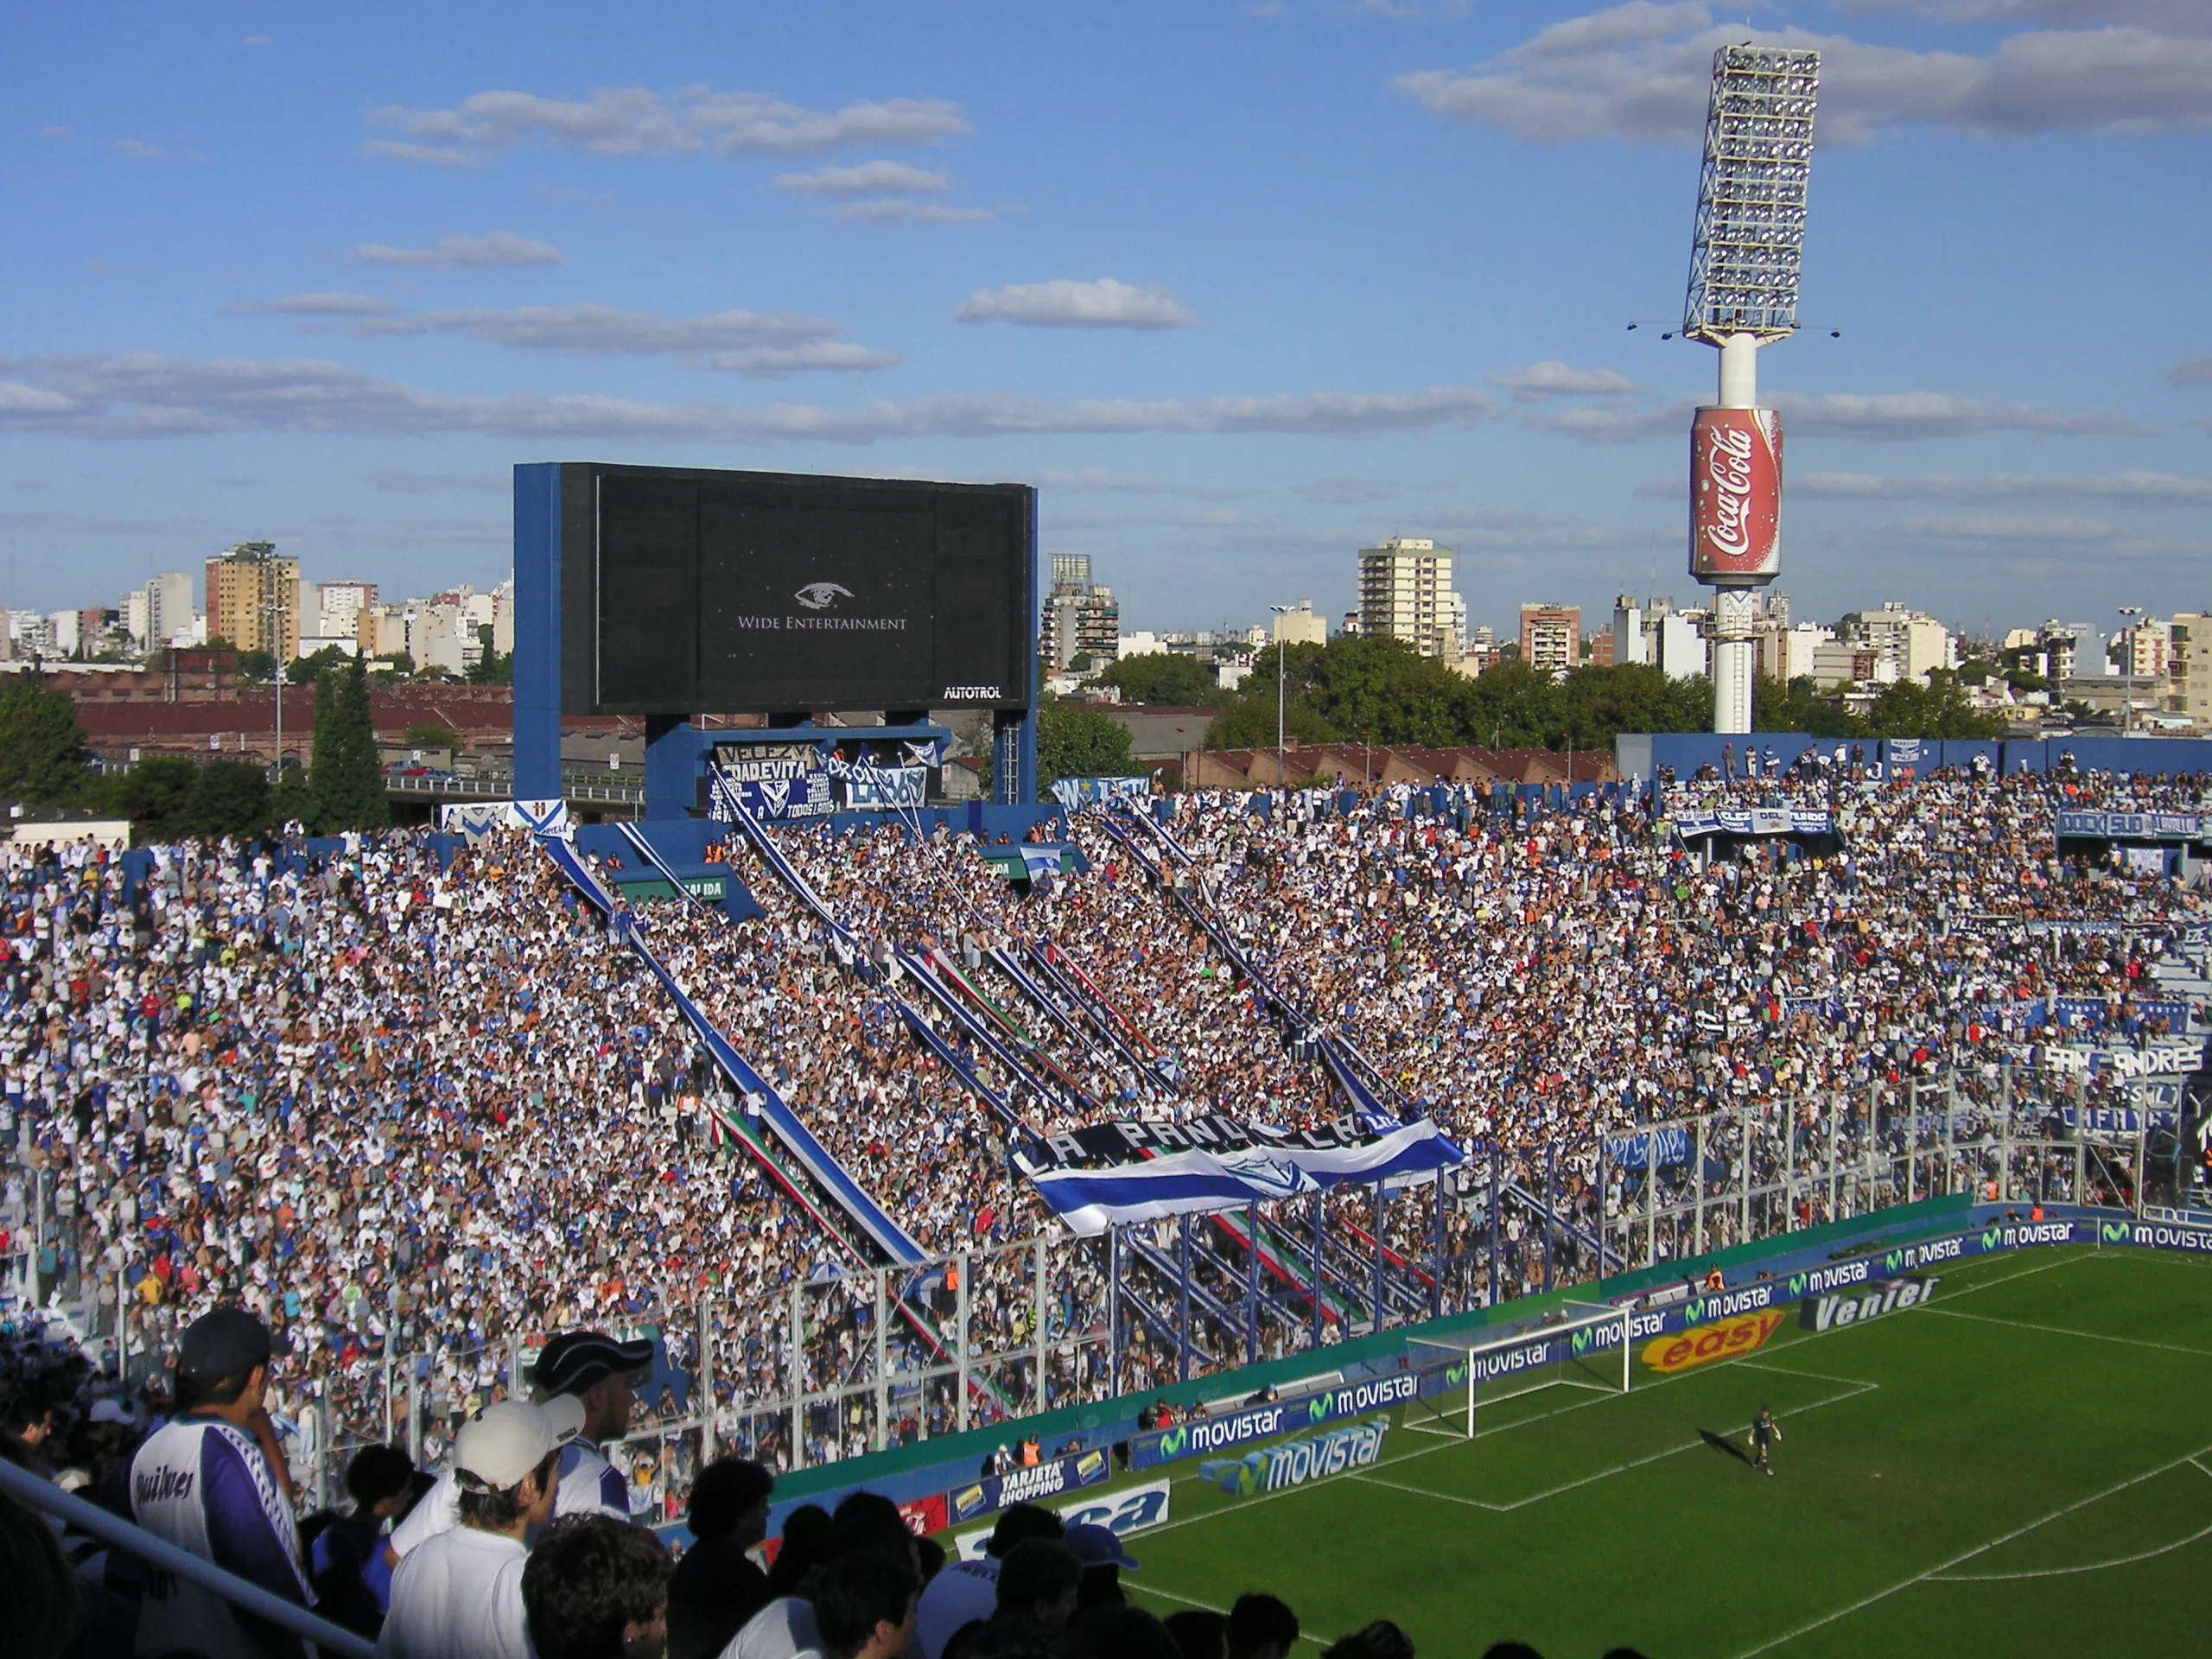 Jose Amalfitani Stadium in Argentina, South America | Football - Rated 4.4